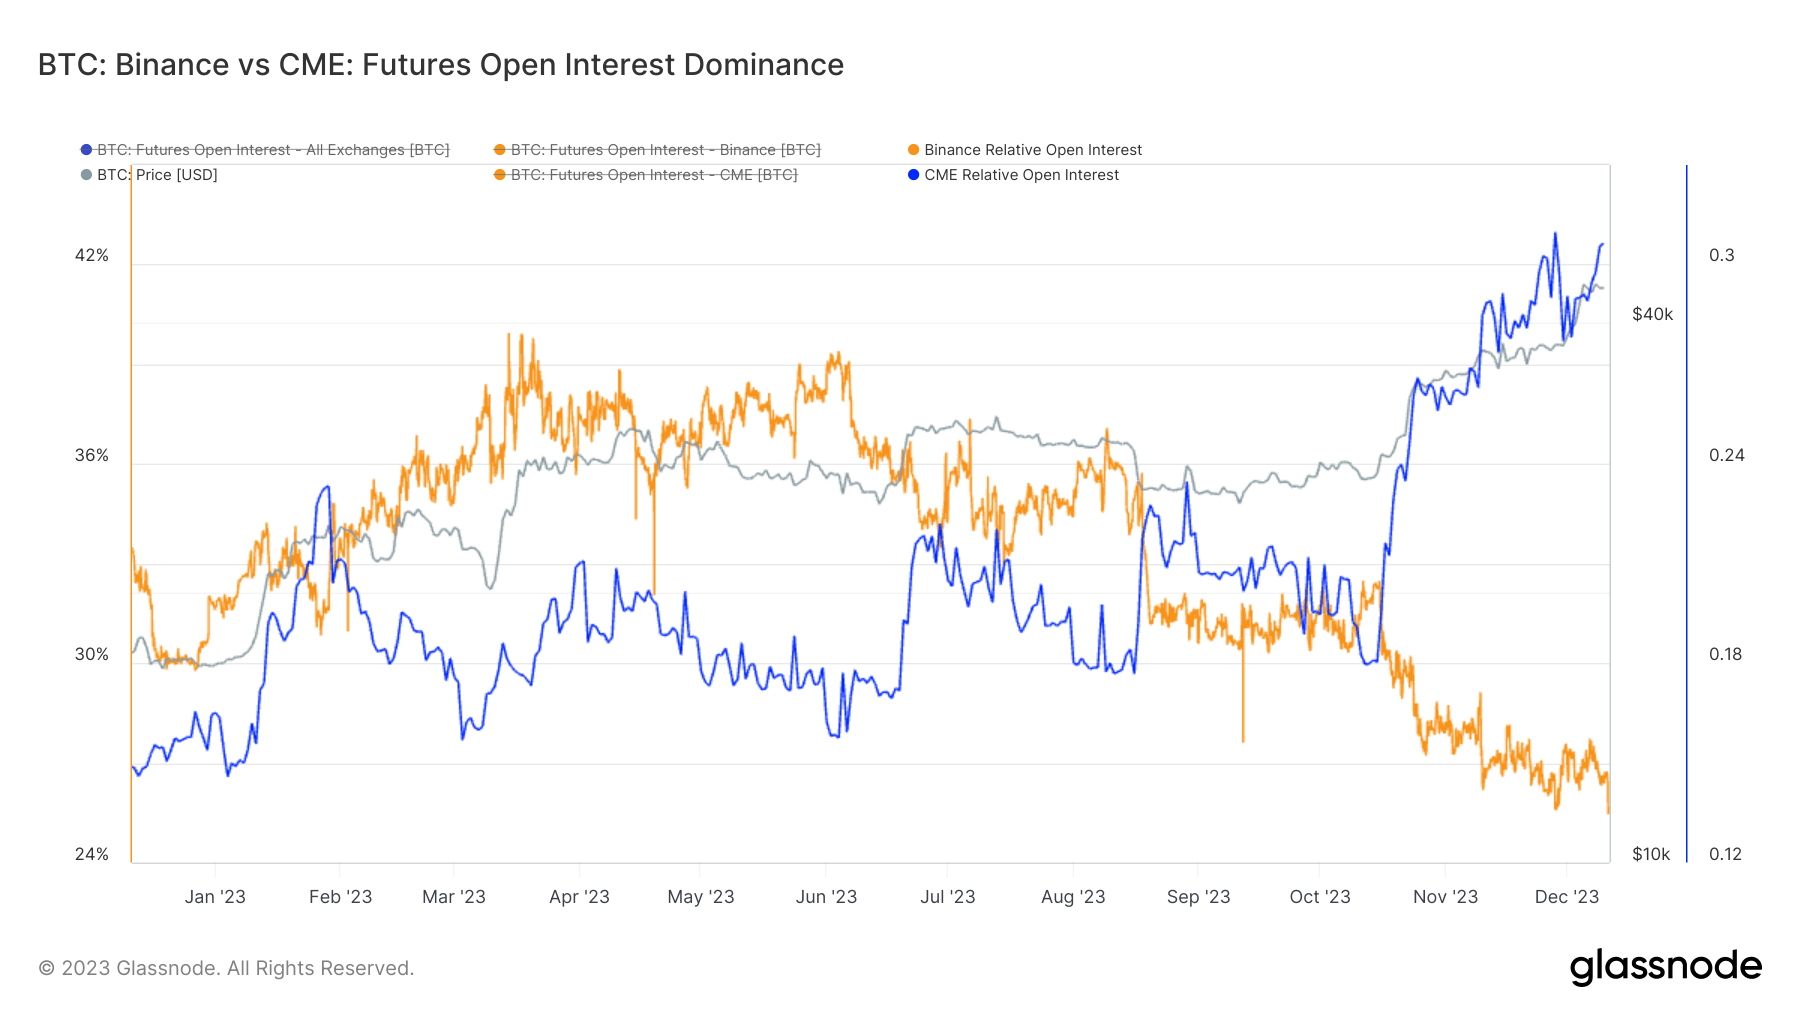 Binance vs CME Dominance Open Interest: (Source: Glassnode)